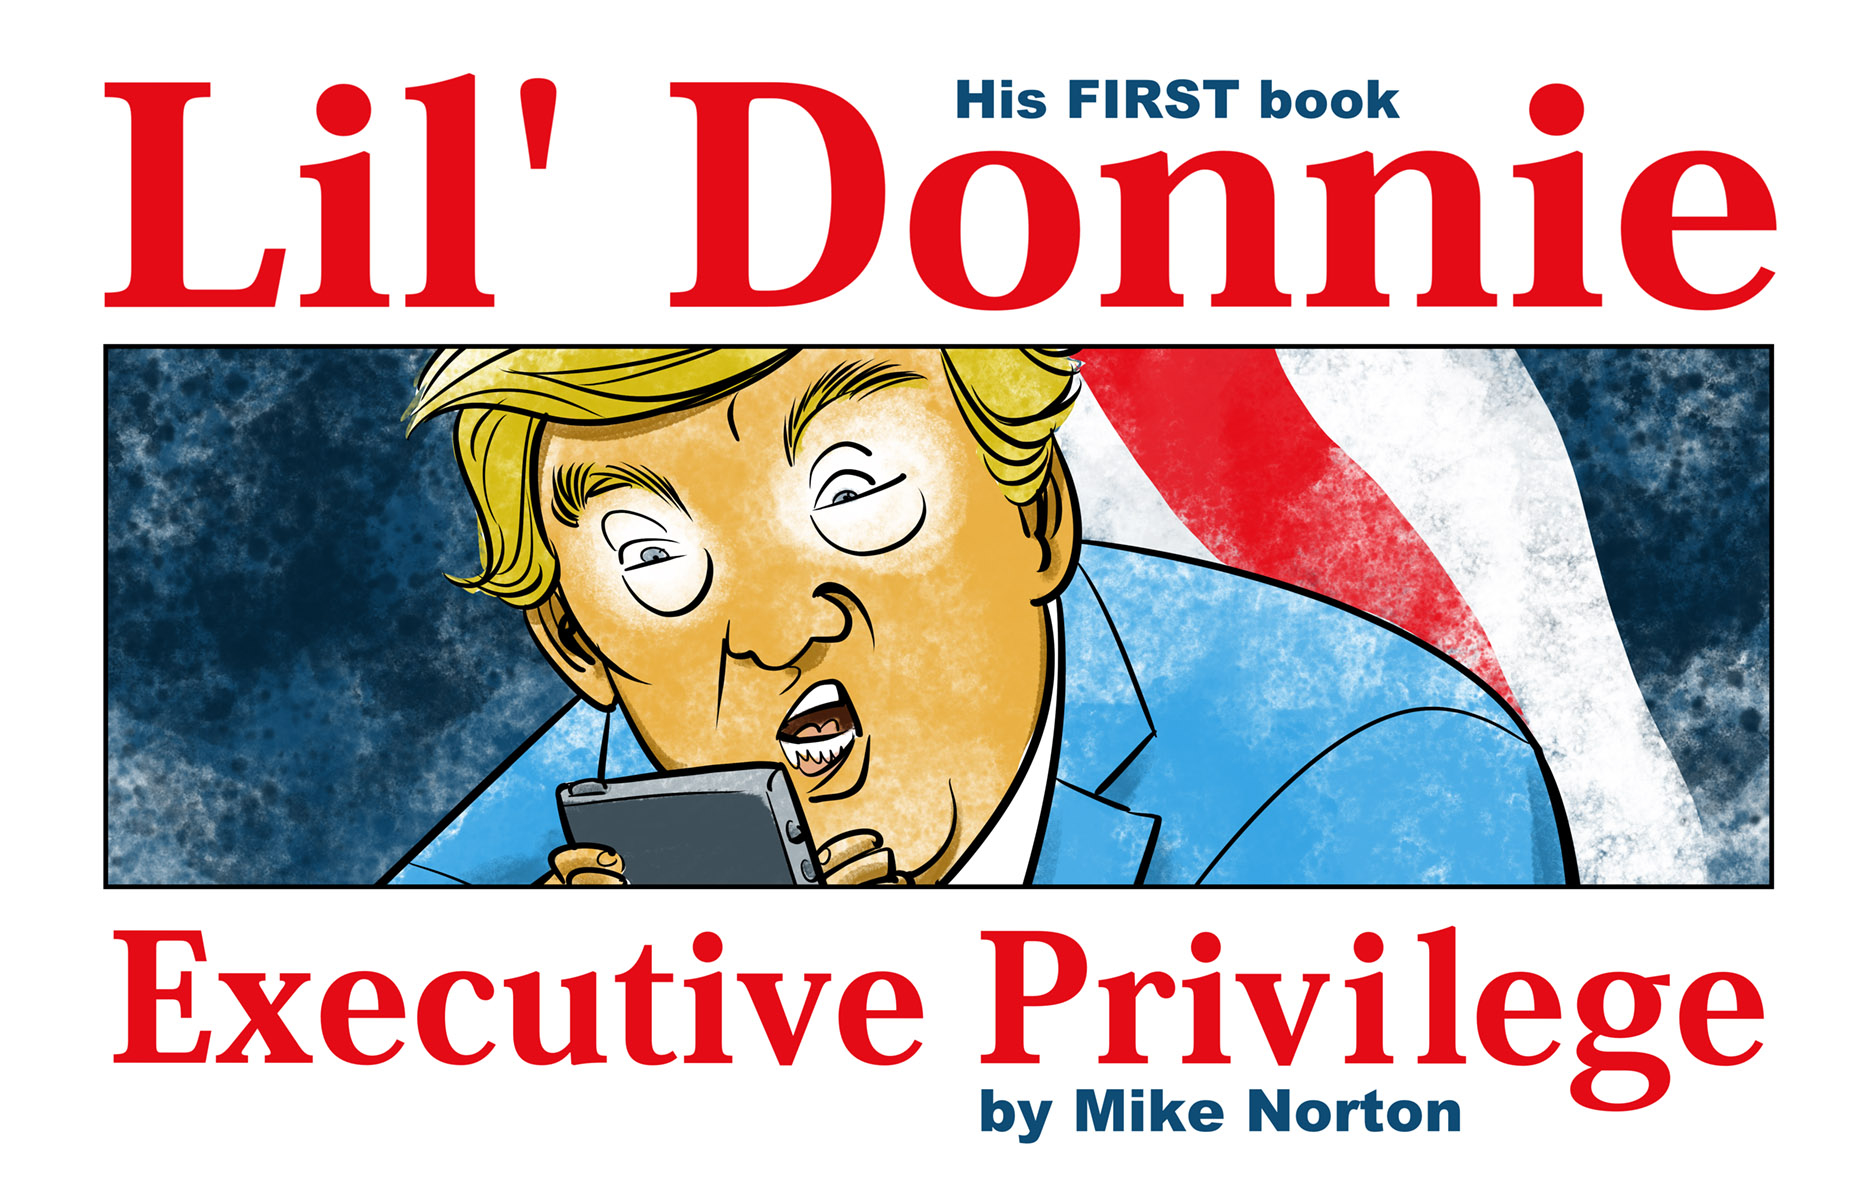 Lil Donnie Hardcover Volume 1 Executive Privilege